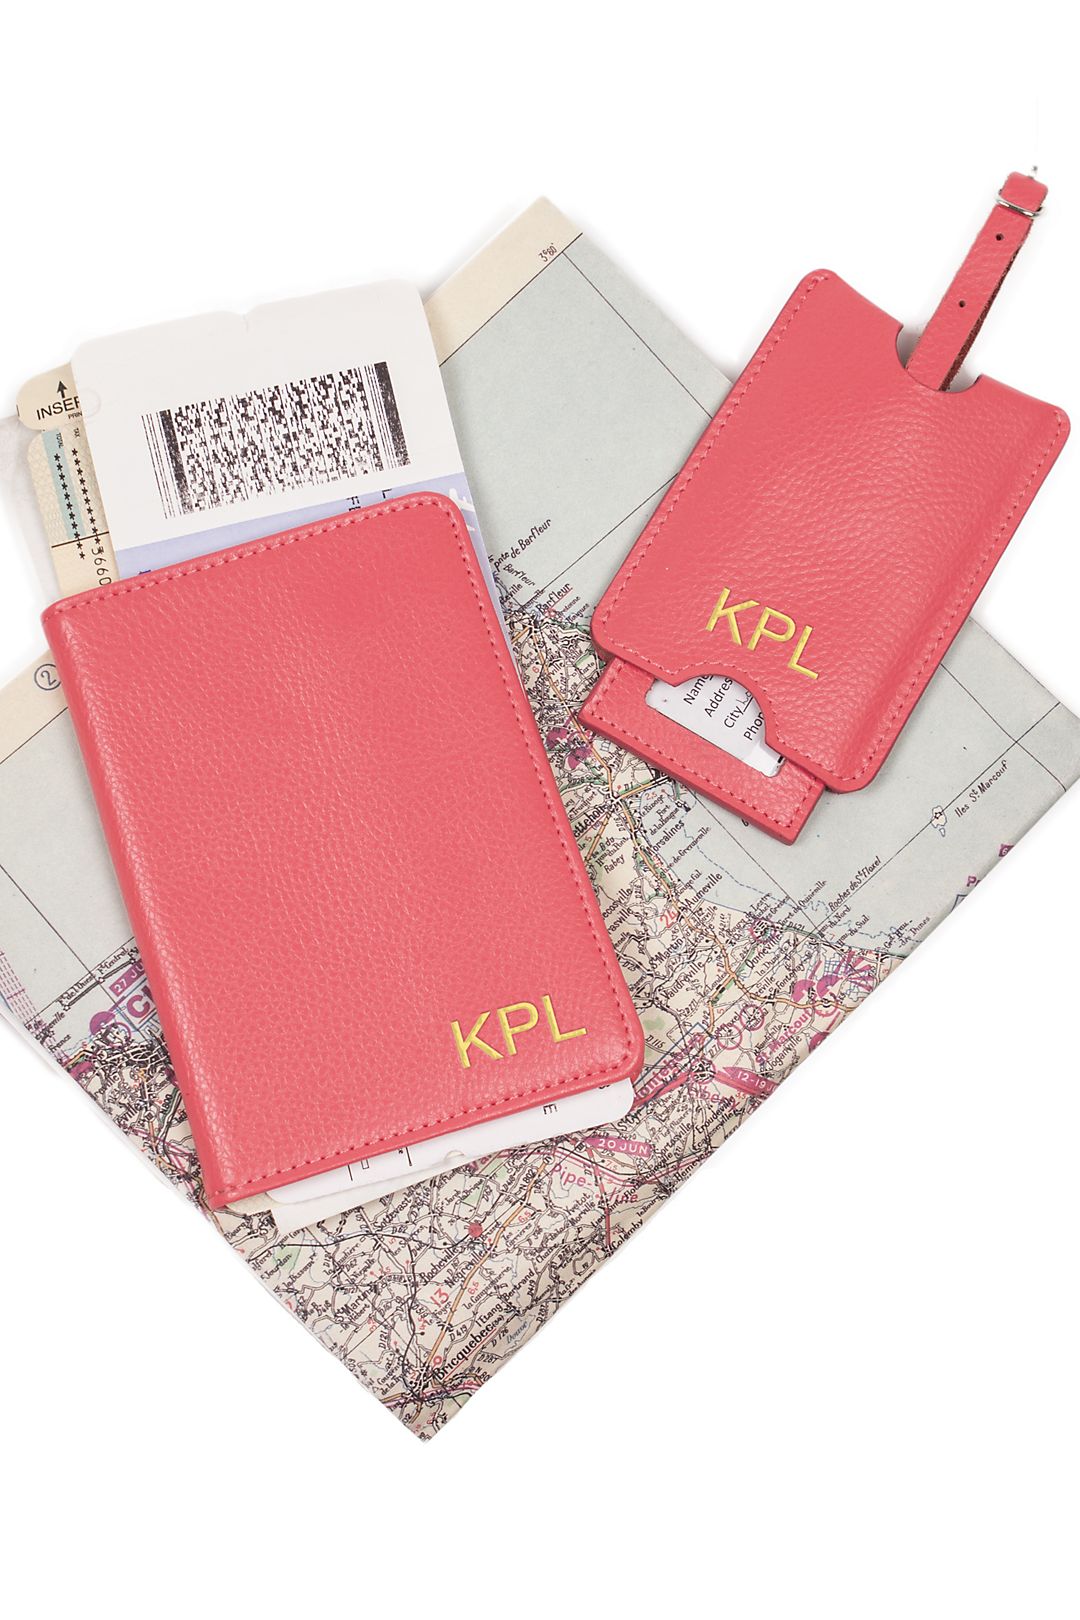 Personalized Passport Cover & Luggage Tag Set Custom Passport 